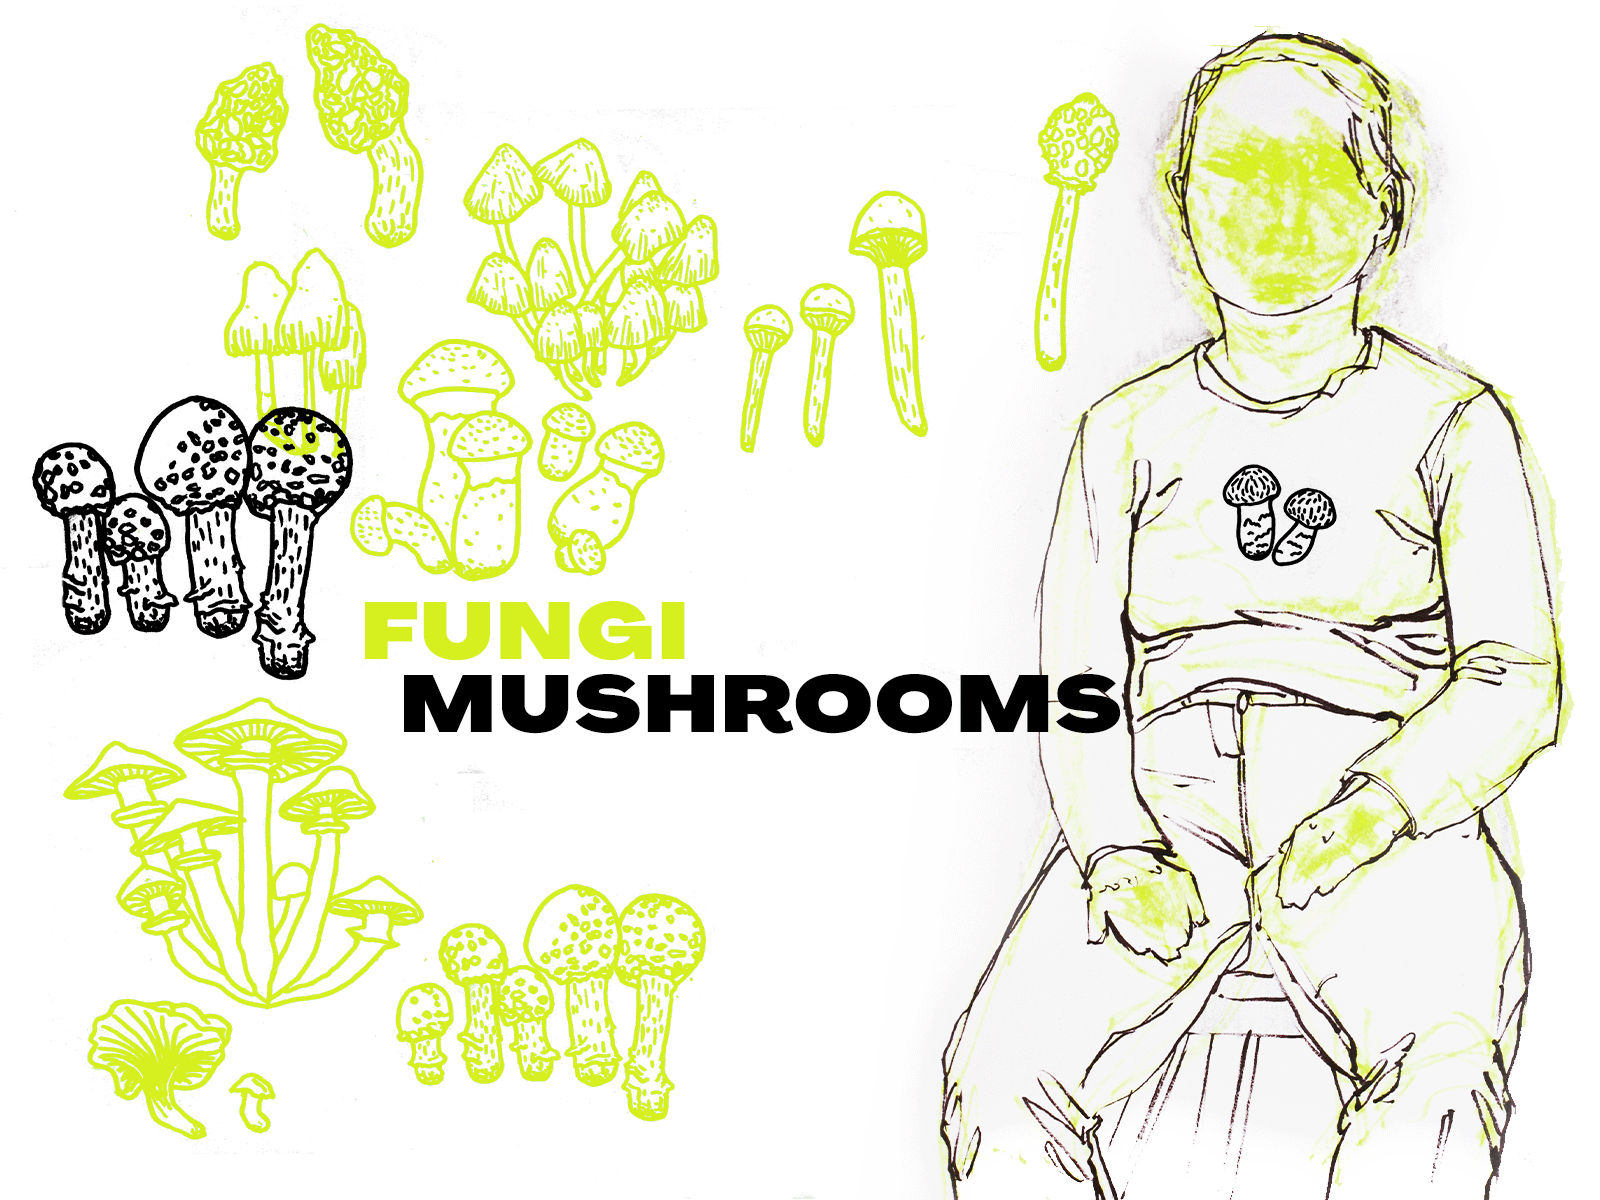 dribble11 drawing hand drawn human illustration mushroom portrait sketch